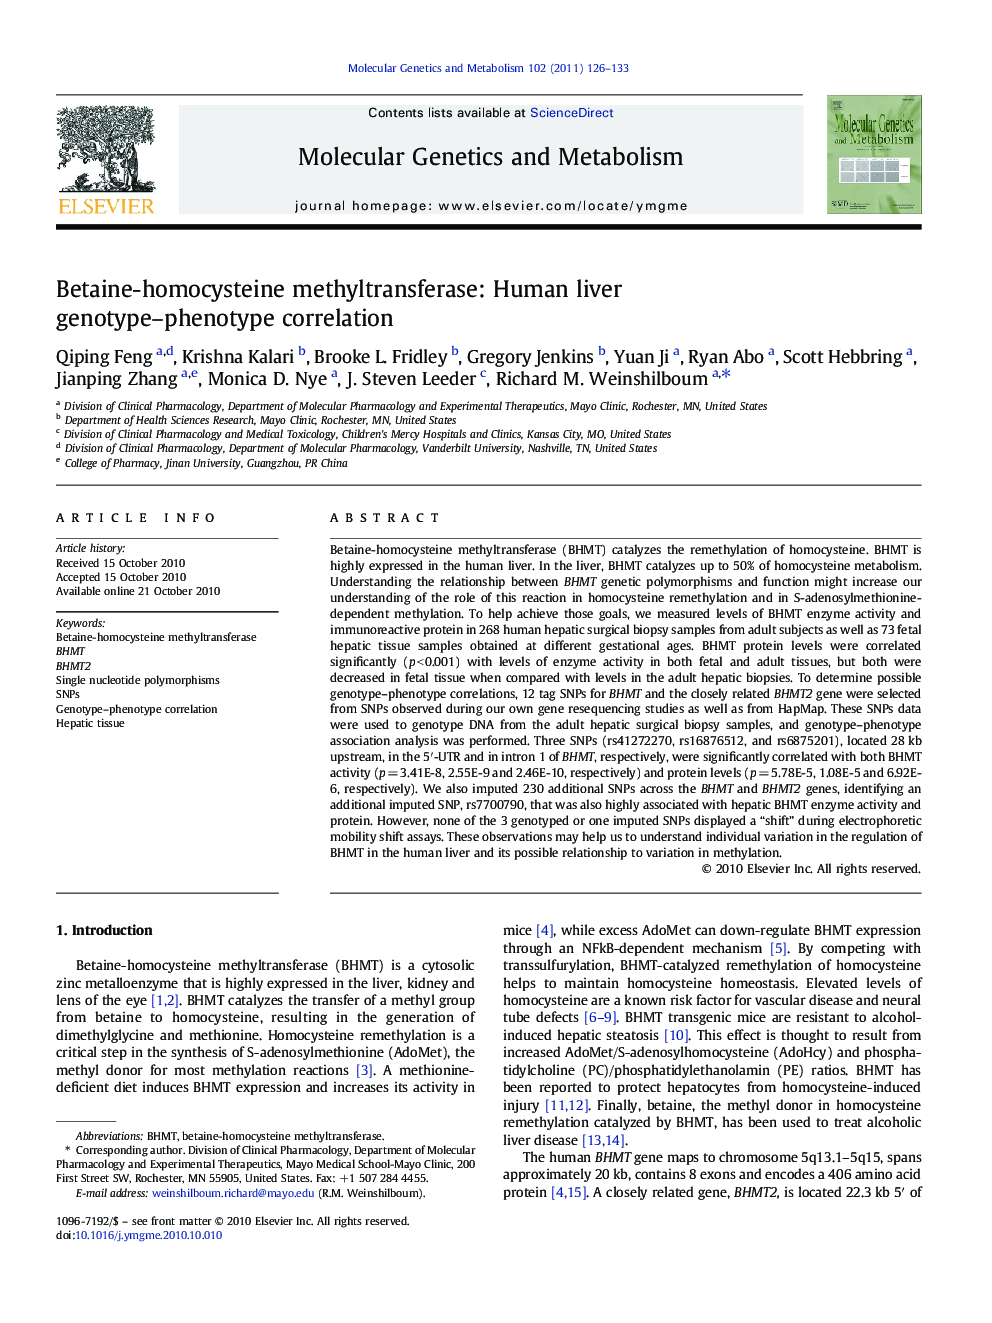 Betaine-homocysteine methyltransferase: Human liver genotype–phenotype correlation